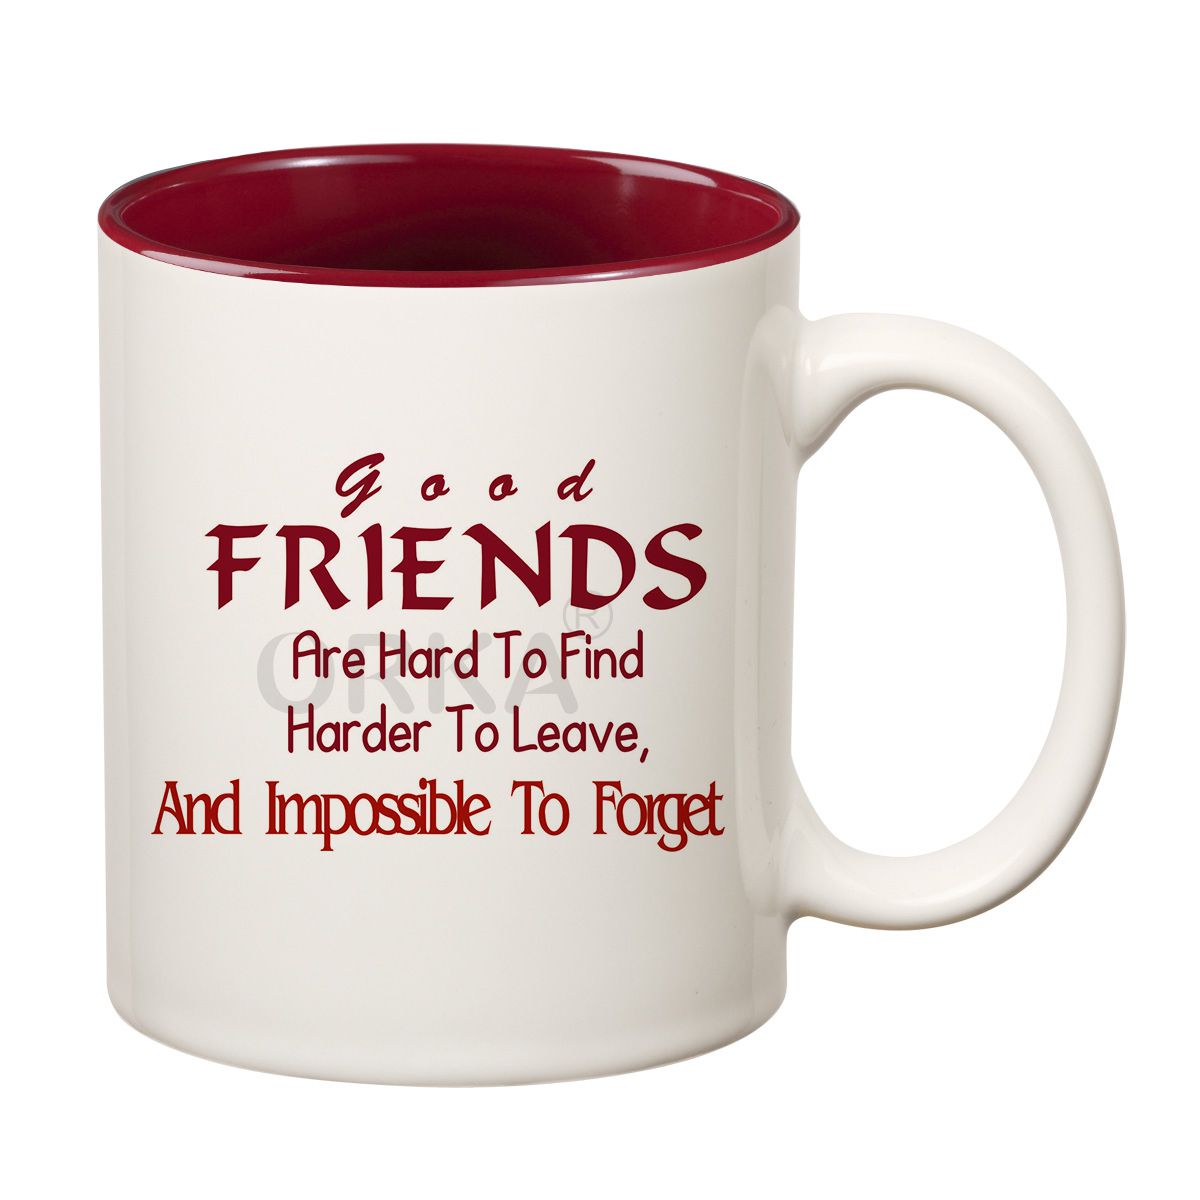 ORKA Coffee Mug Quotes Printed(Good Friends) Theme 11 Oz   